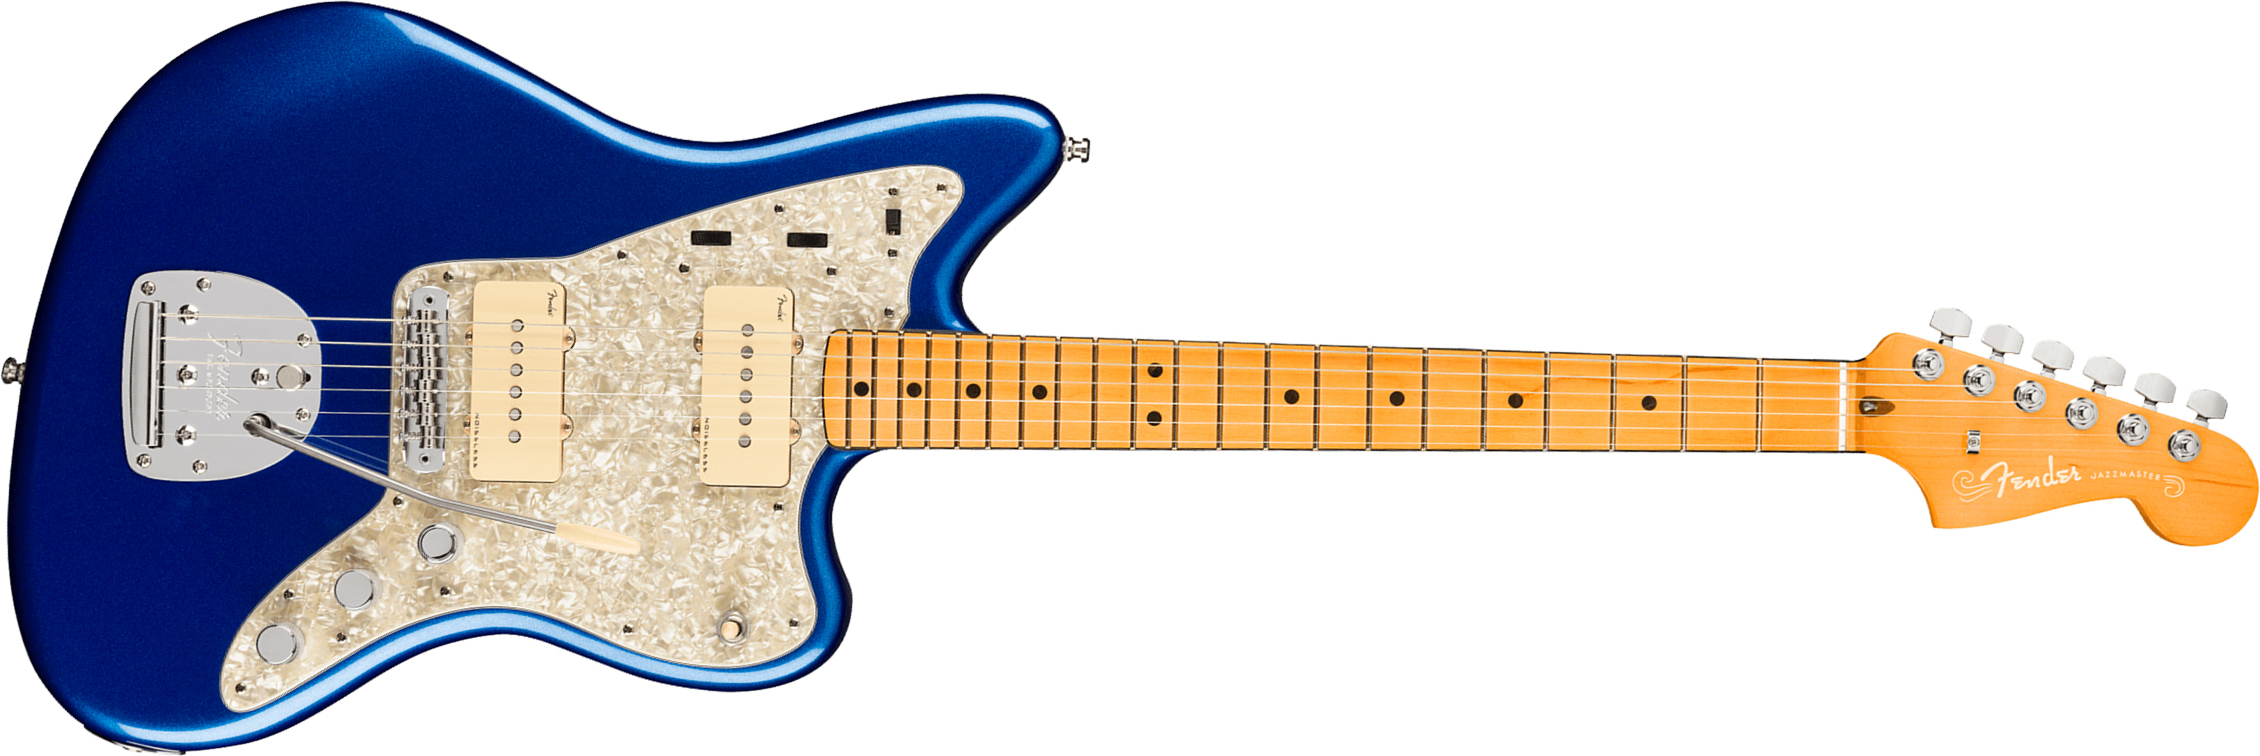 Fender Jazzmaster American Ultra 2019 Usa Mn - Cobra Blue - Guitarra electrica retro rock - Main picture